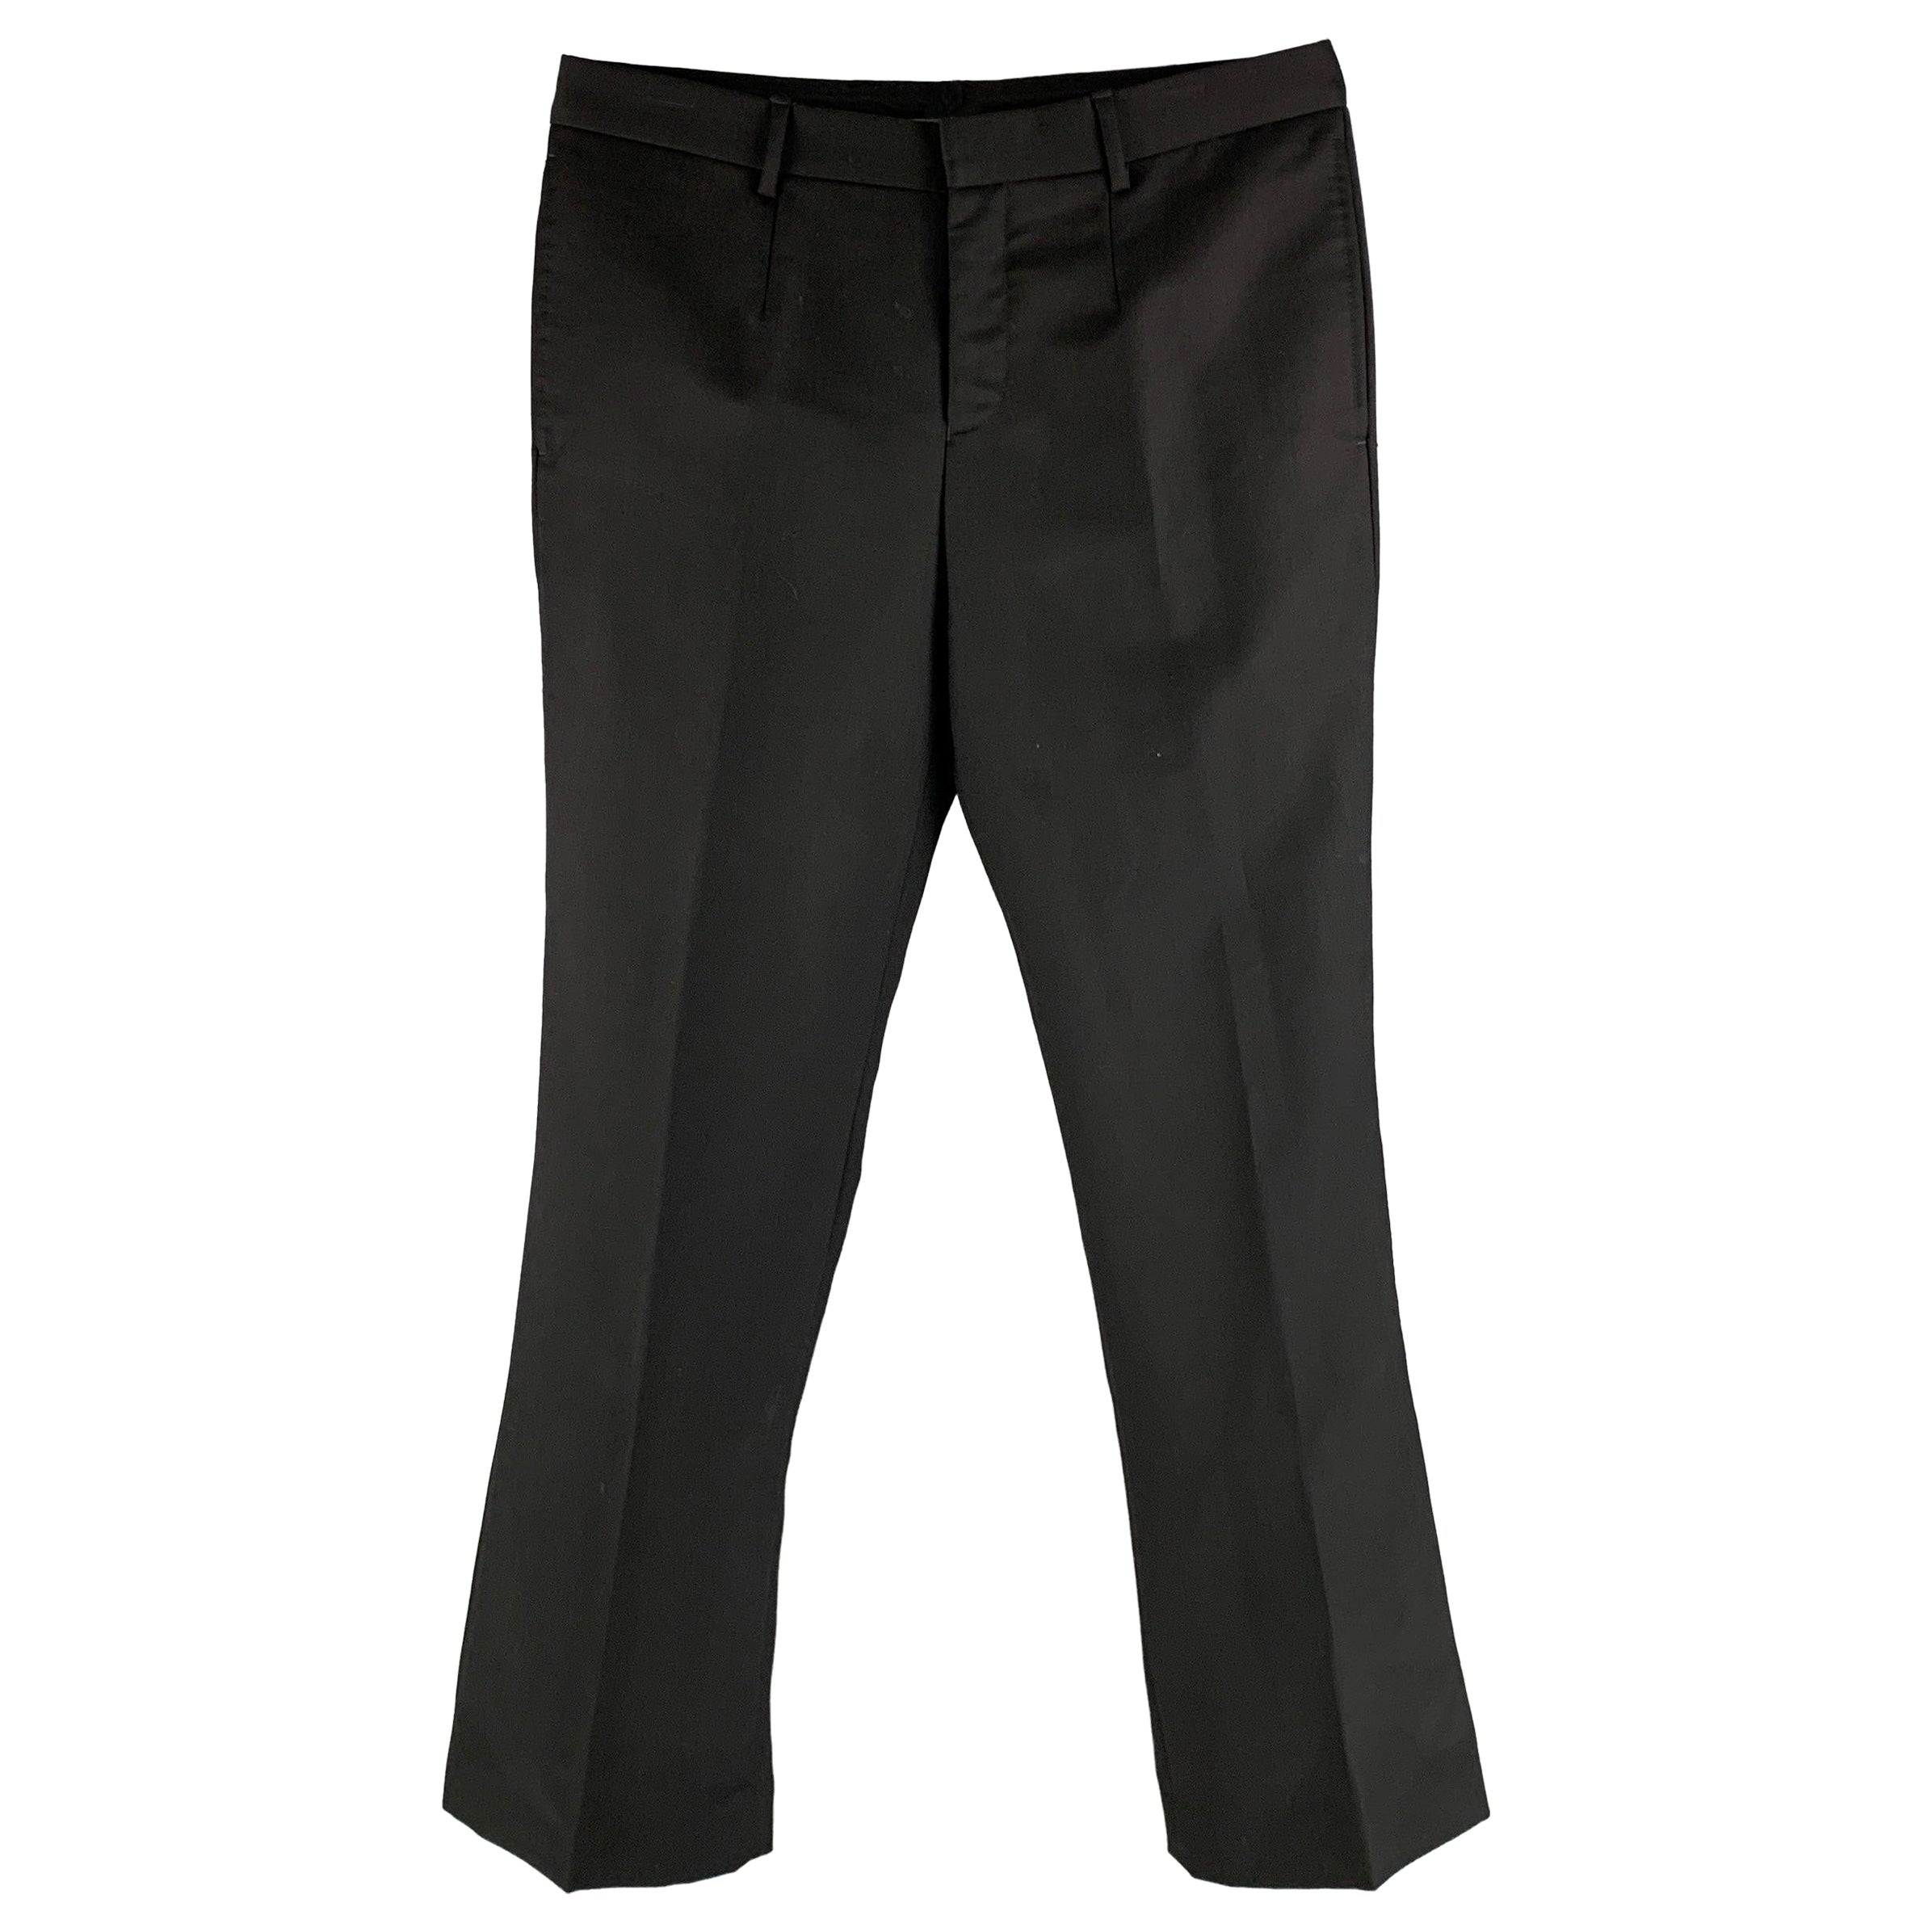 BURBERRY PRORSUM Size 32 Black Solid Wool Blend Zip Fly Dress Pants